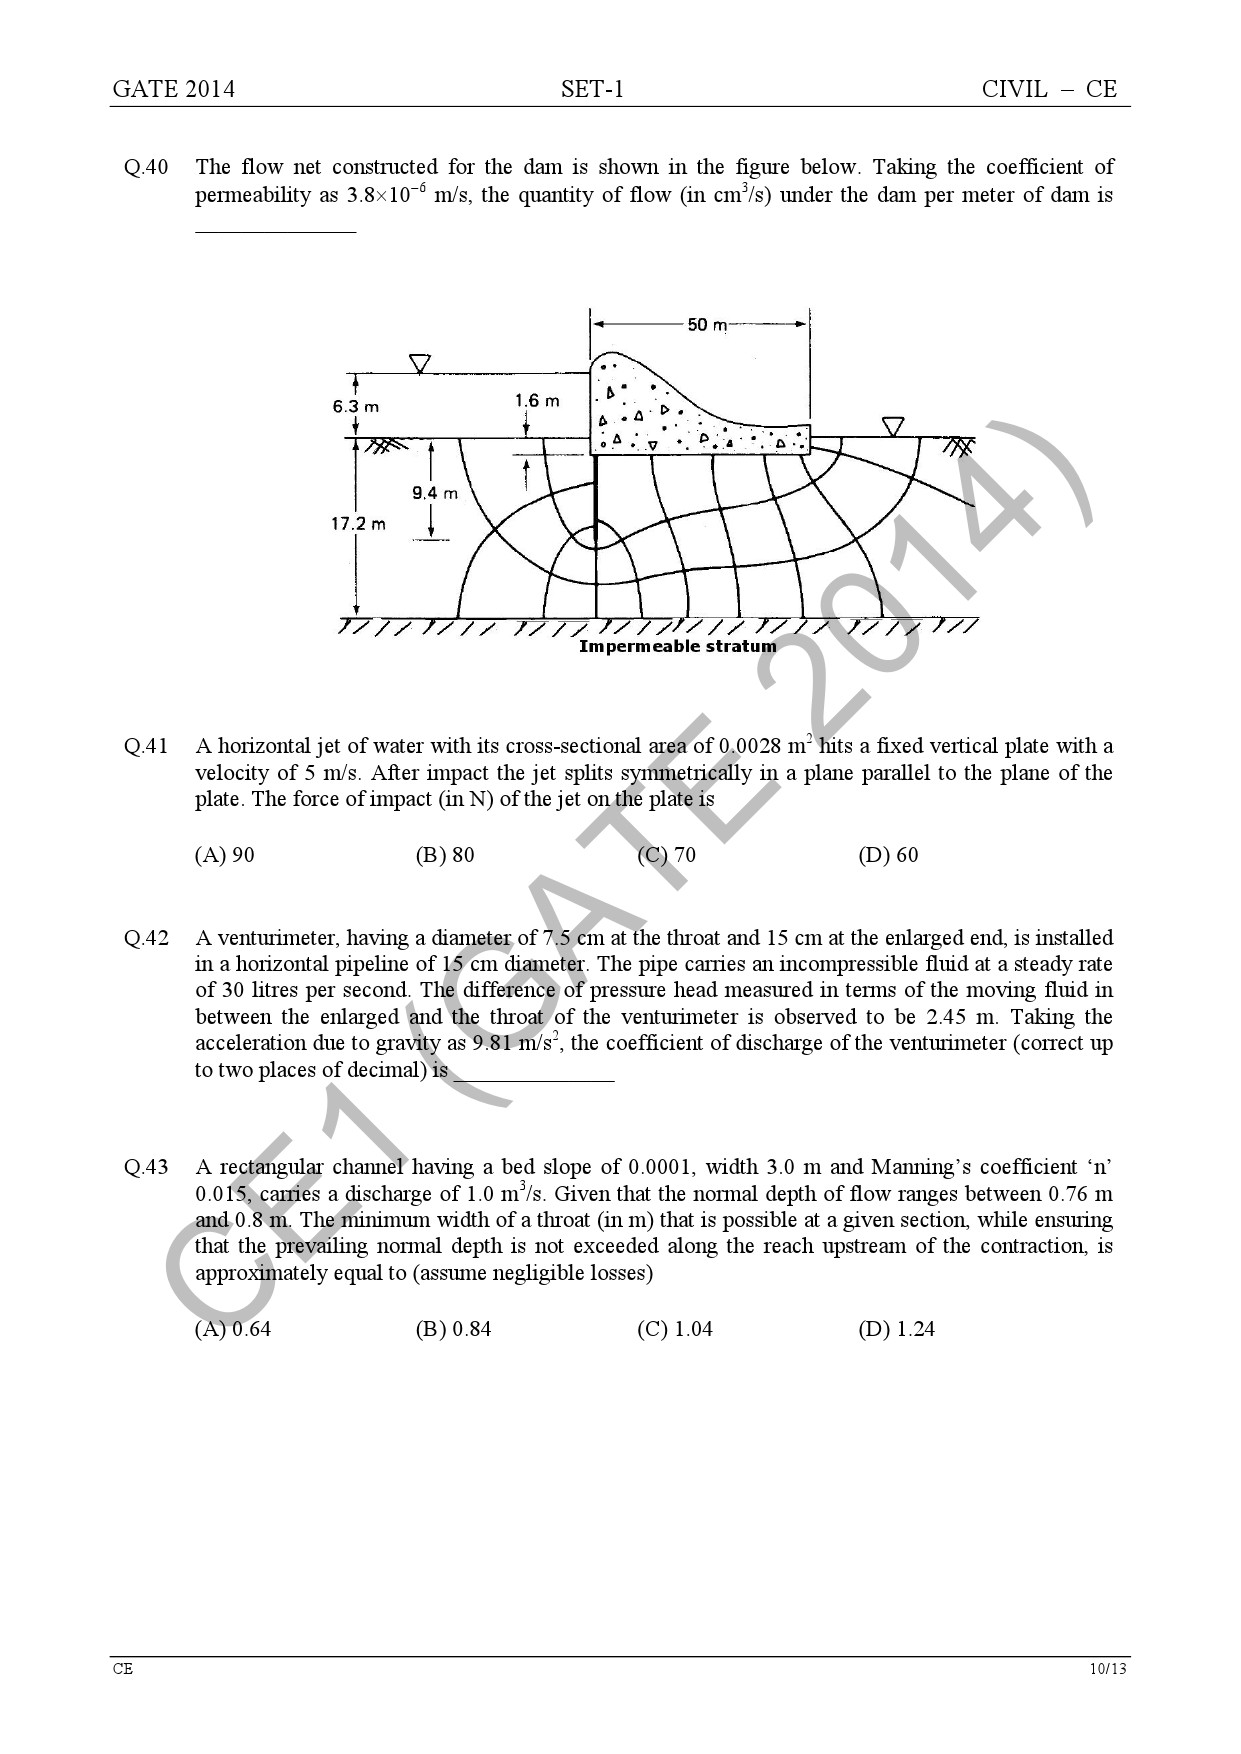 GATE Exam Question Paper 2014 Civil Engineering Set 1 16